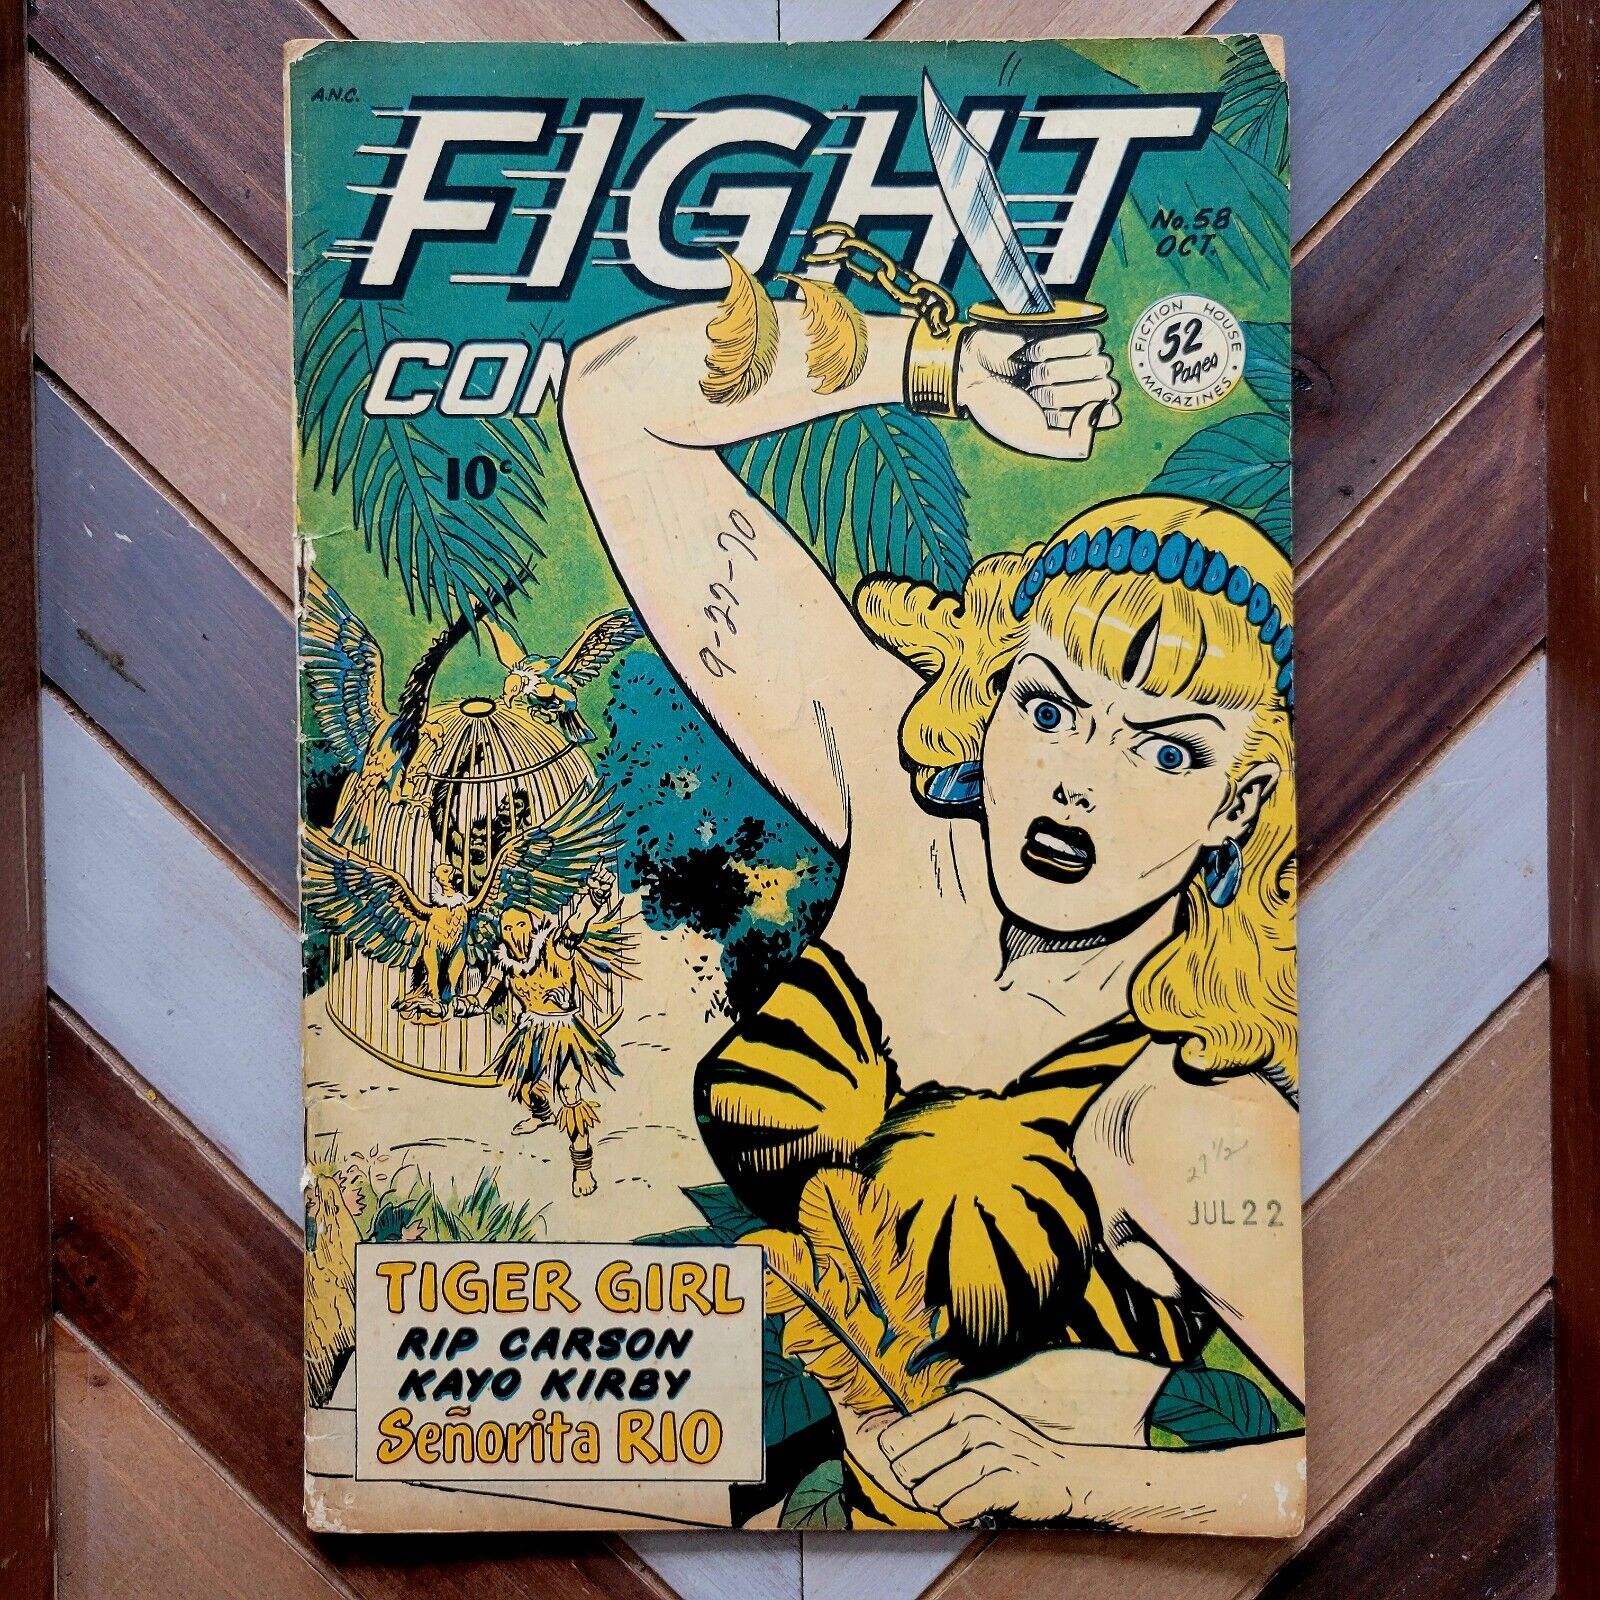 FIGHT COMICS #58 VG (Fiction House 1948) Scarce PRE-CODE / TIGER GIRL 1st Print